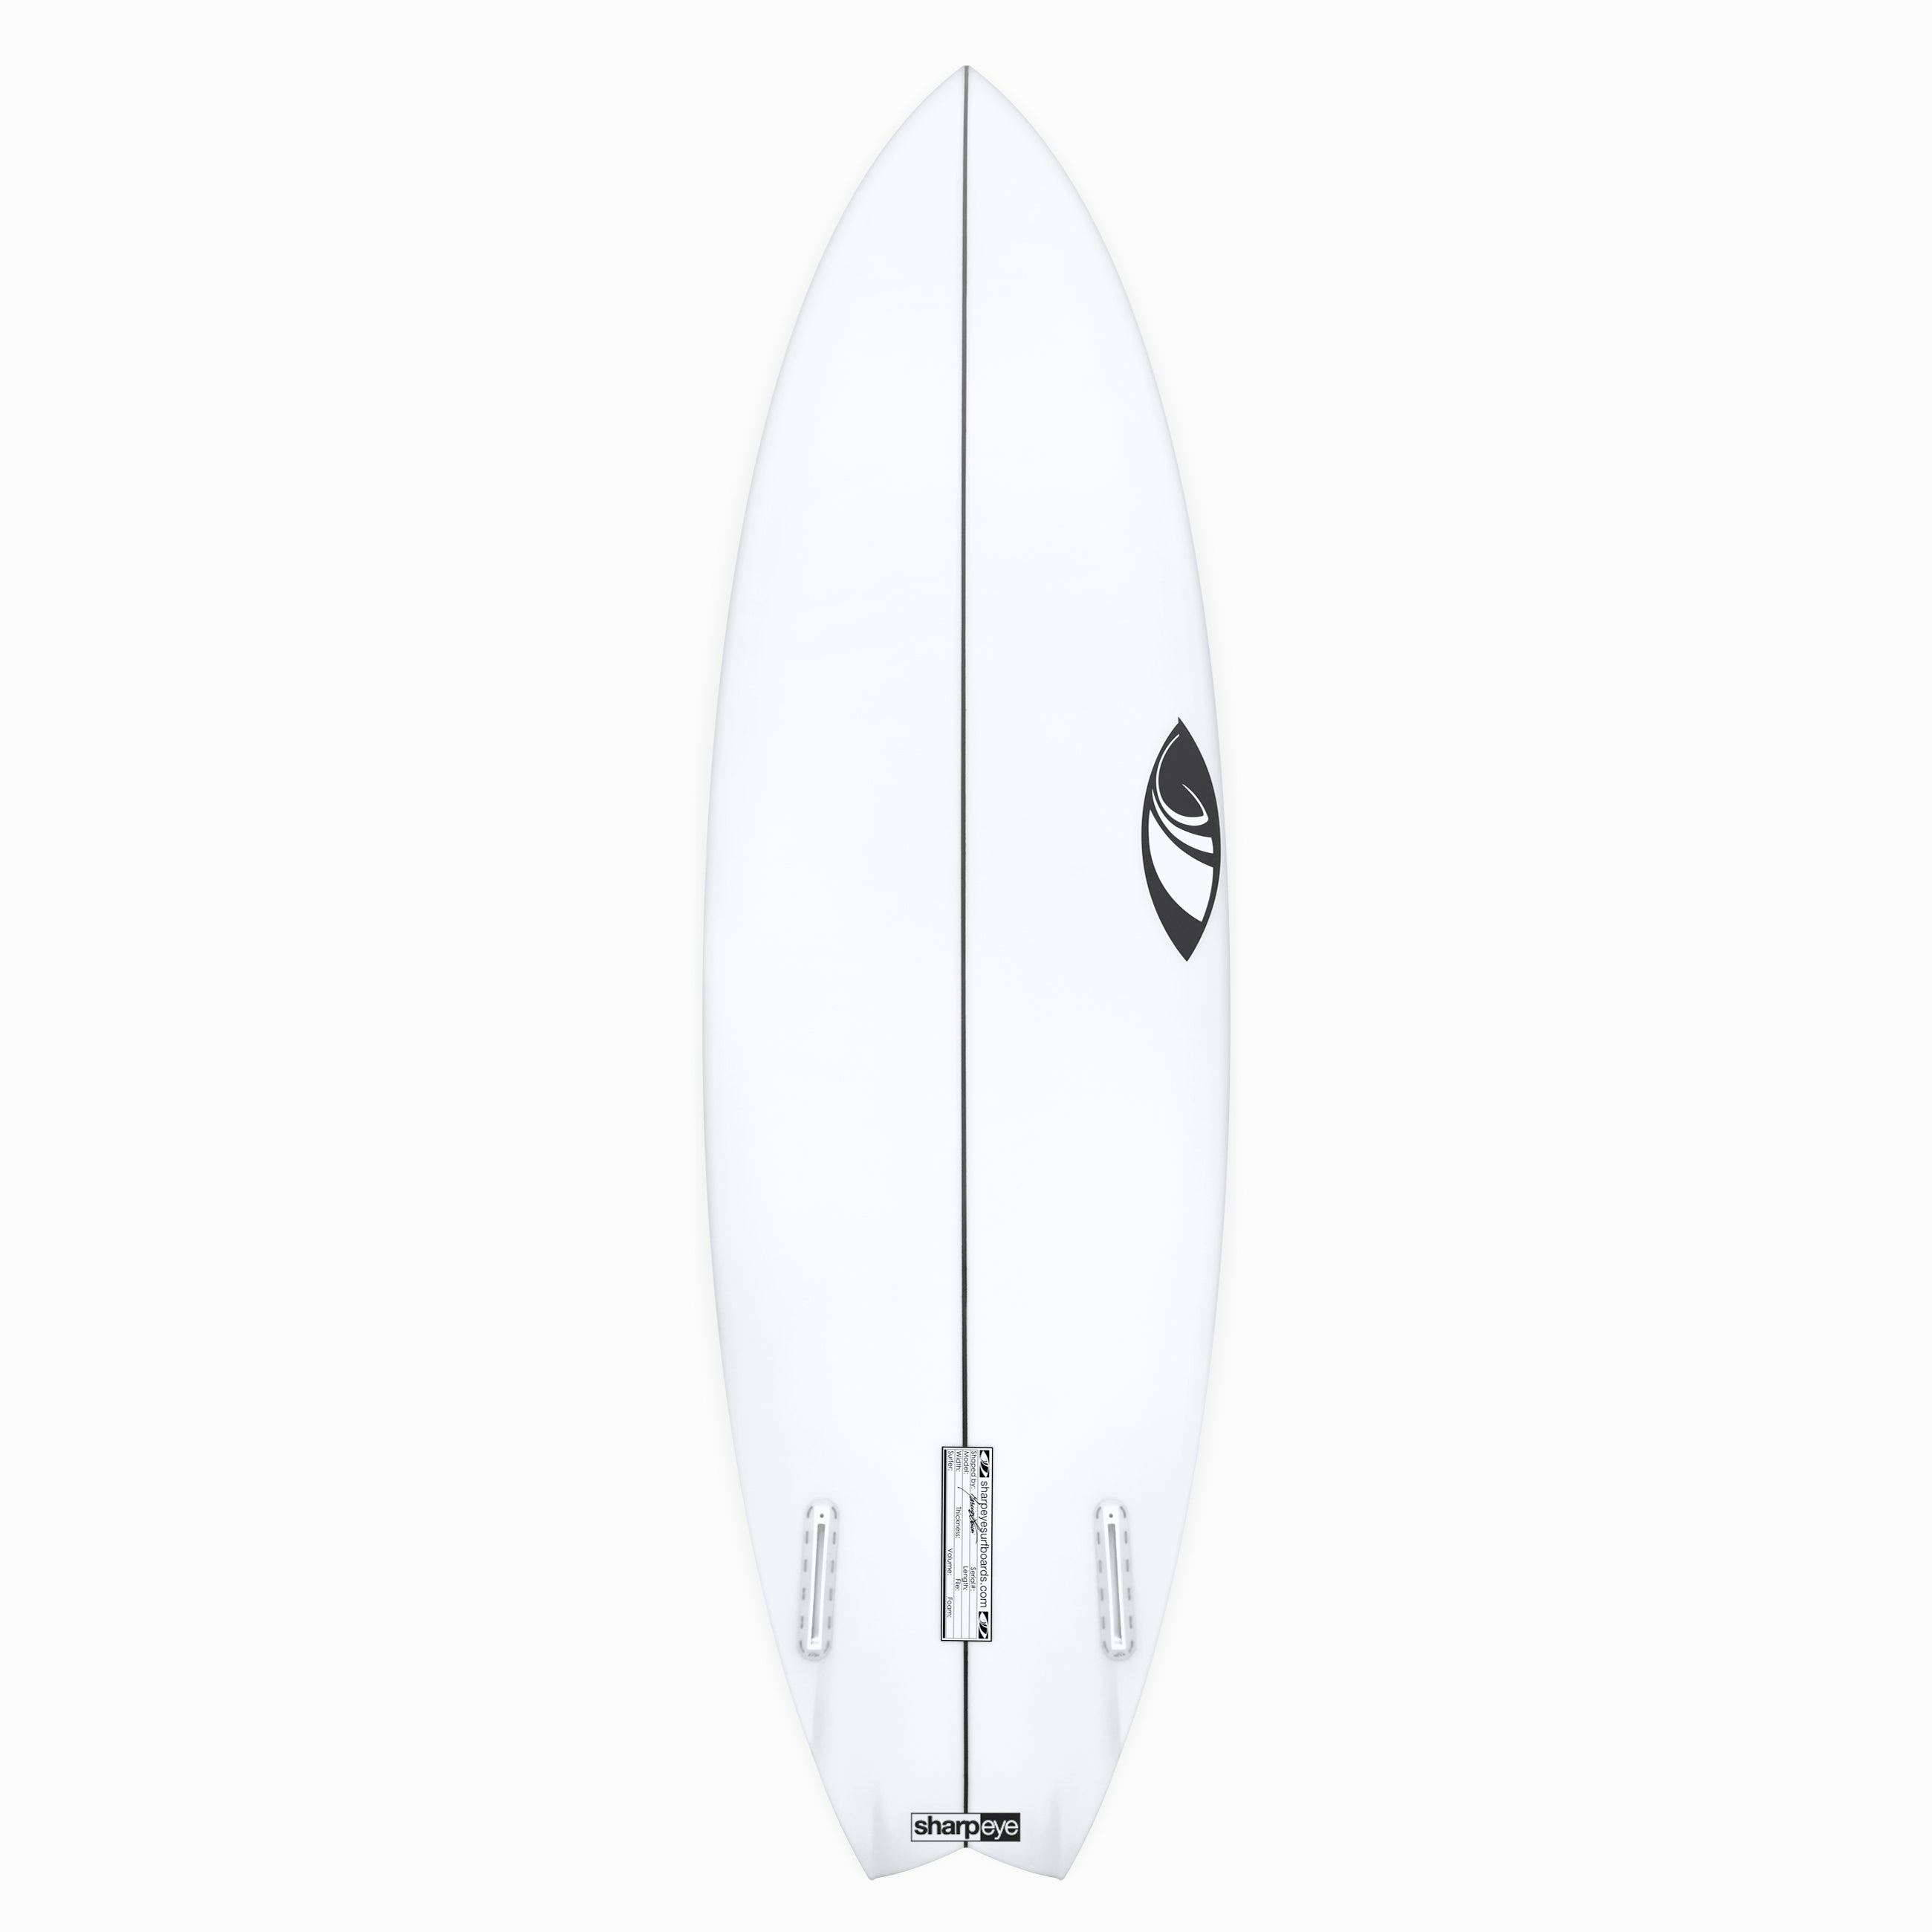 Storms T2 Model | Pro Range | Sharp Eye Surfboards – SharpEye 